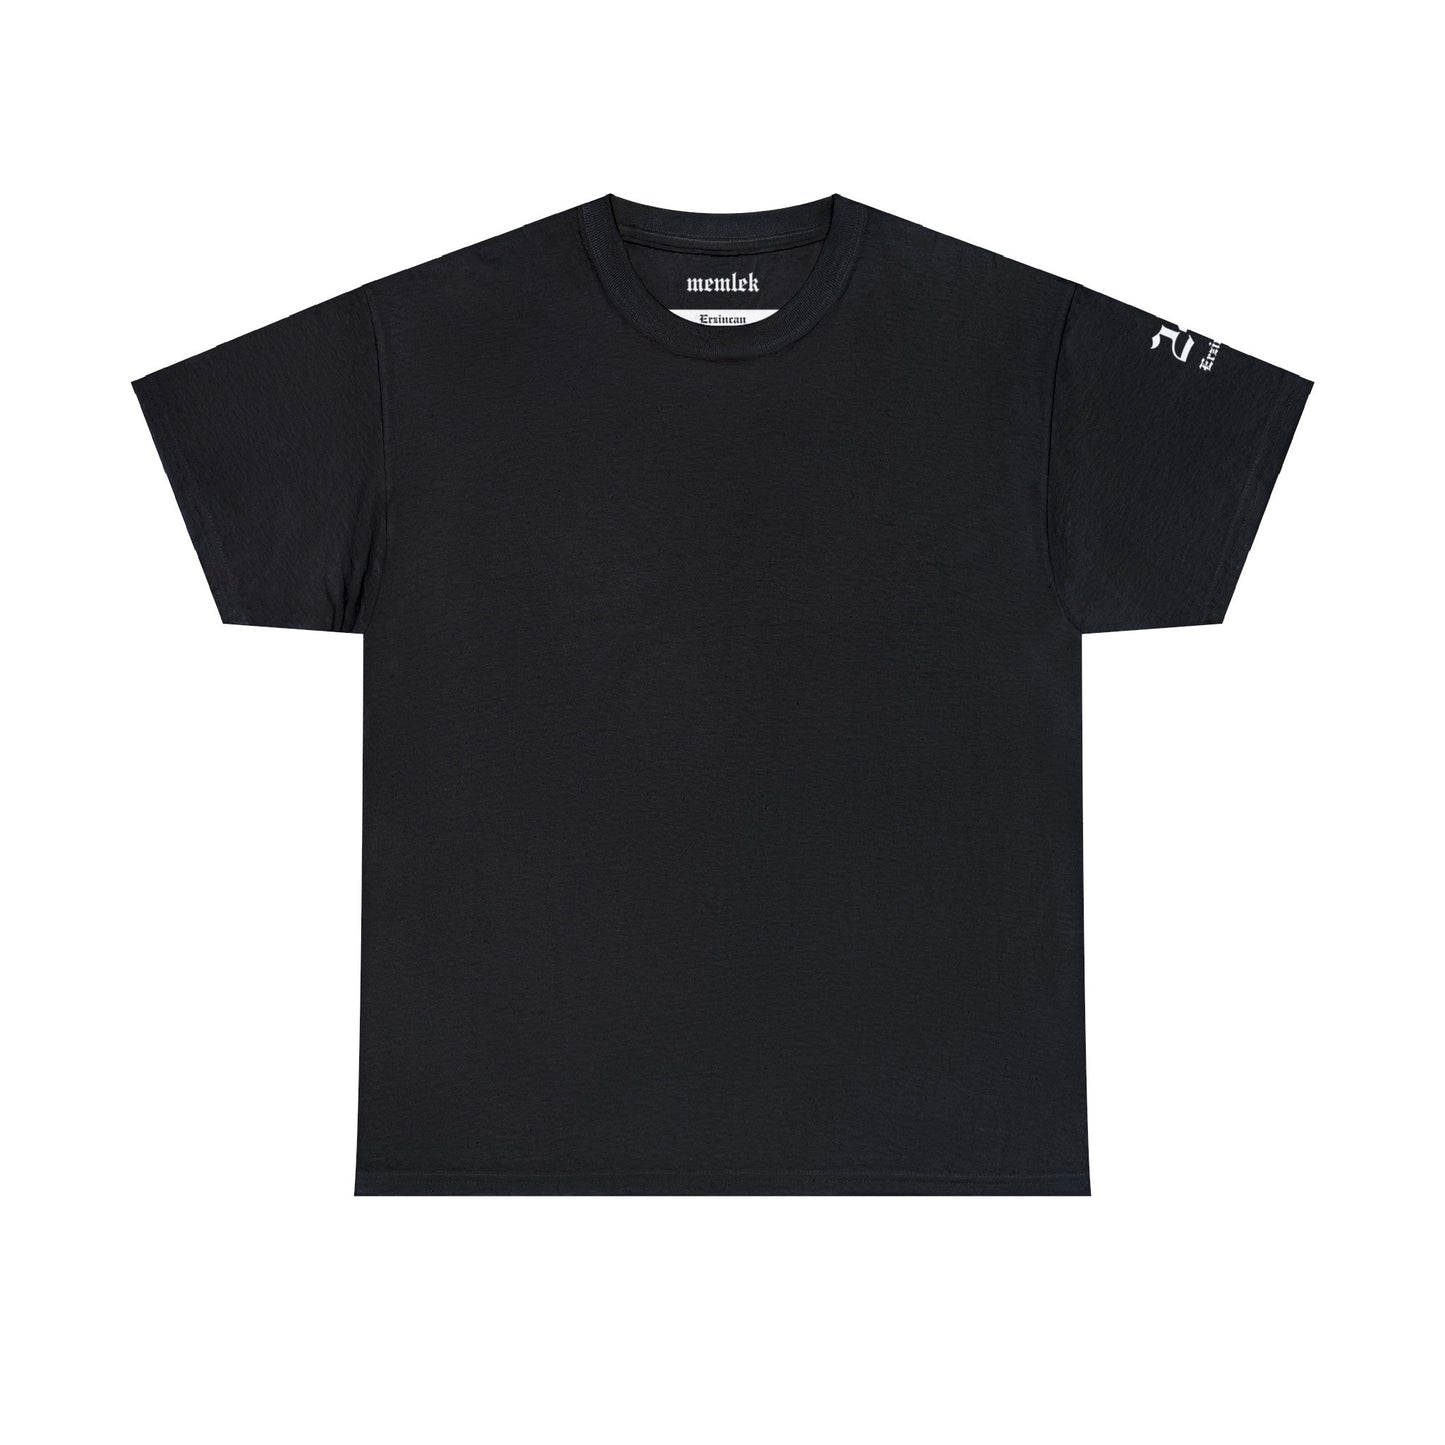 İlçem - 24 Erzincan - T-Shirt - Back Print - Black